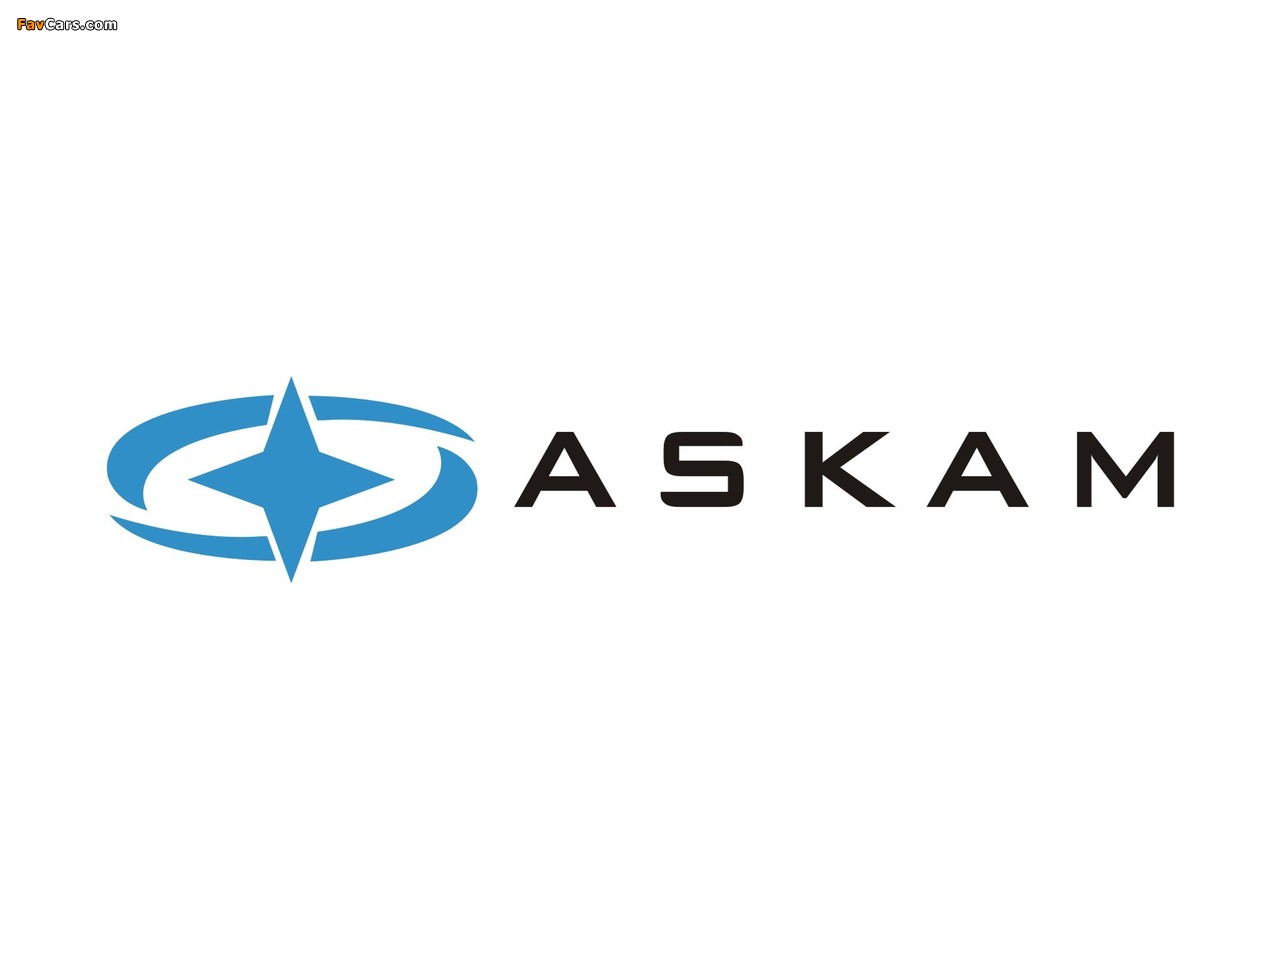 Photos of Askam (1280 x 960)